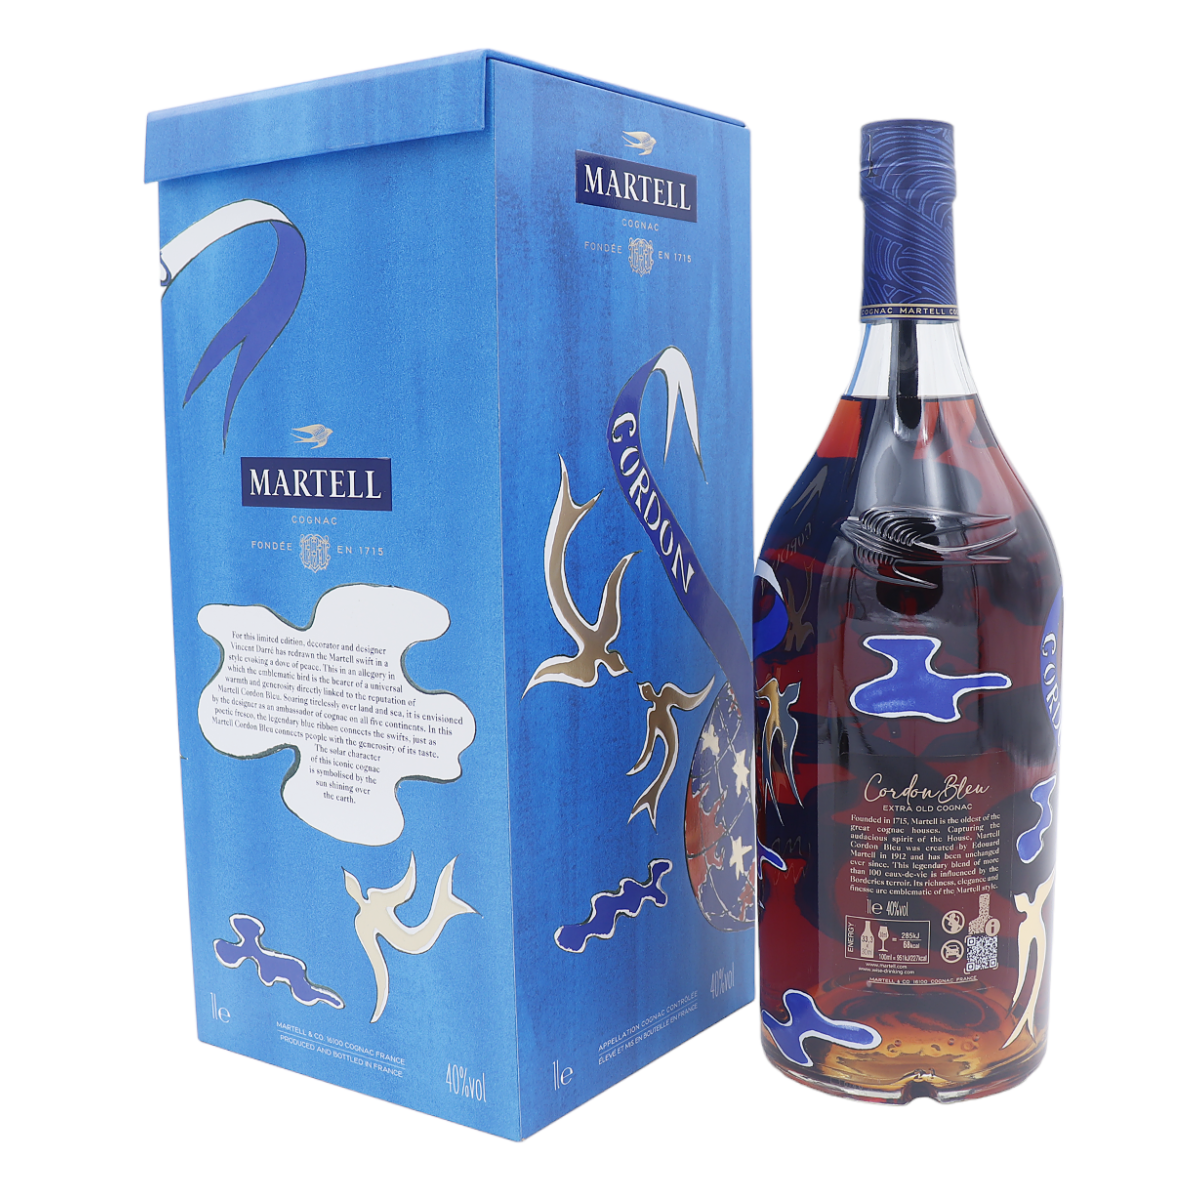 Cognac Martell Cordon Bleu 1 Liter - Limited Edition by Vincent Darre